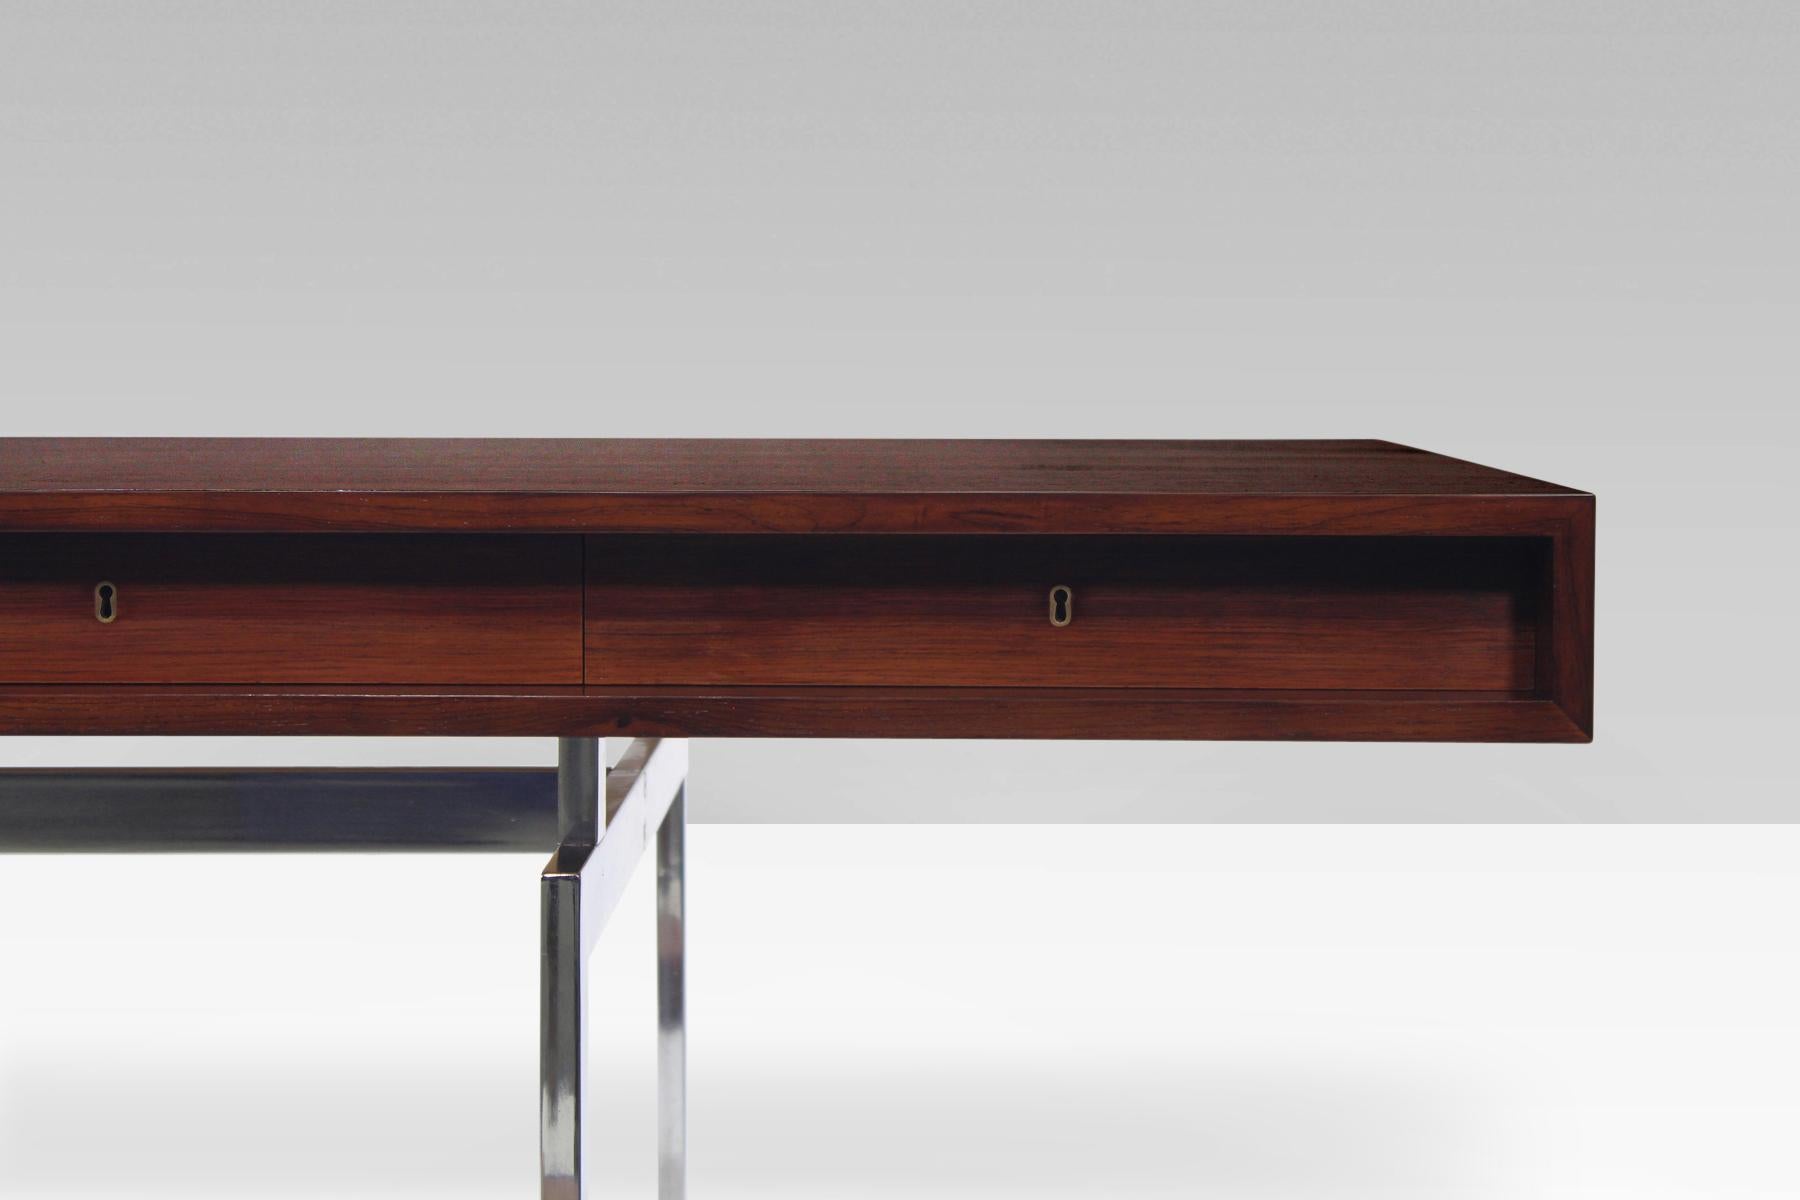 Steel Rare Rosewood Desk by Bodil Kjaer